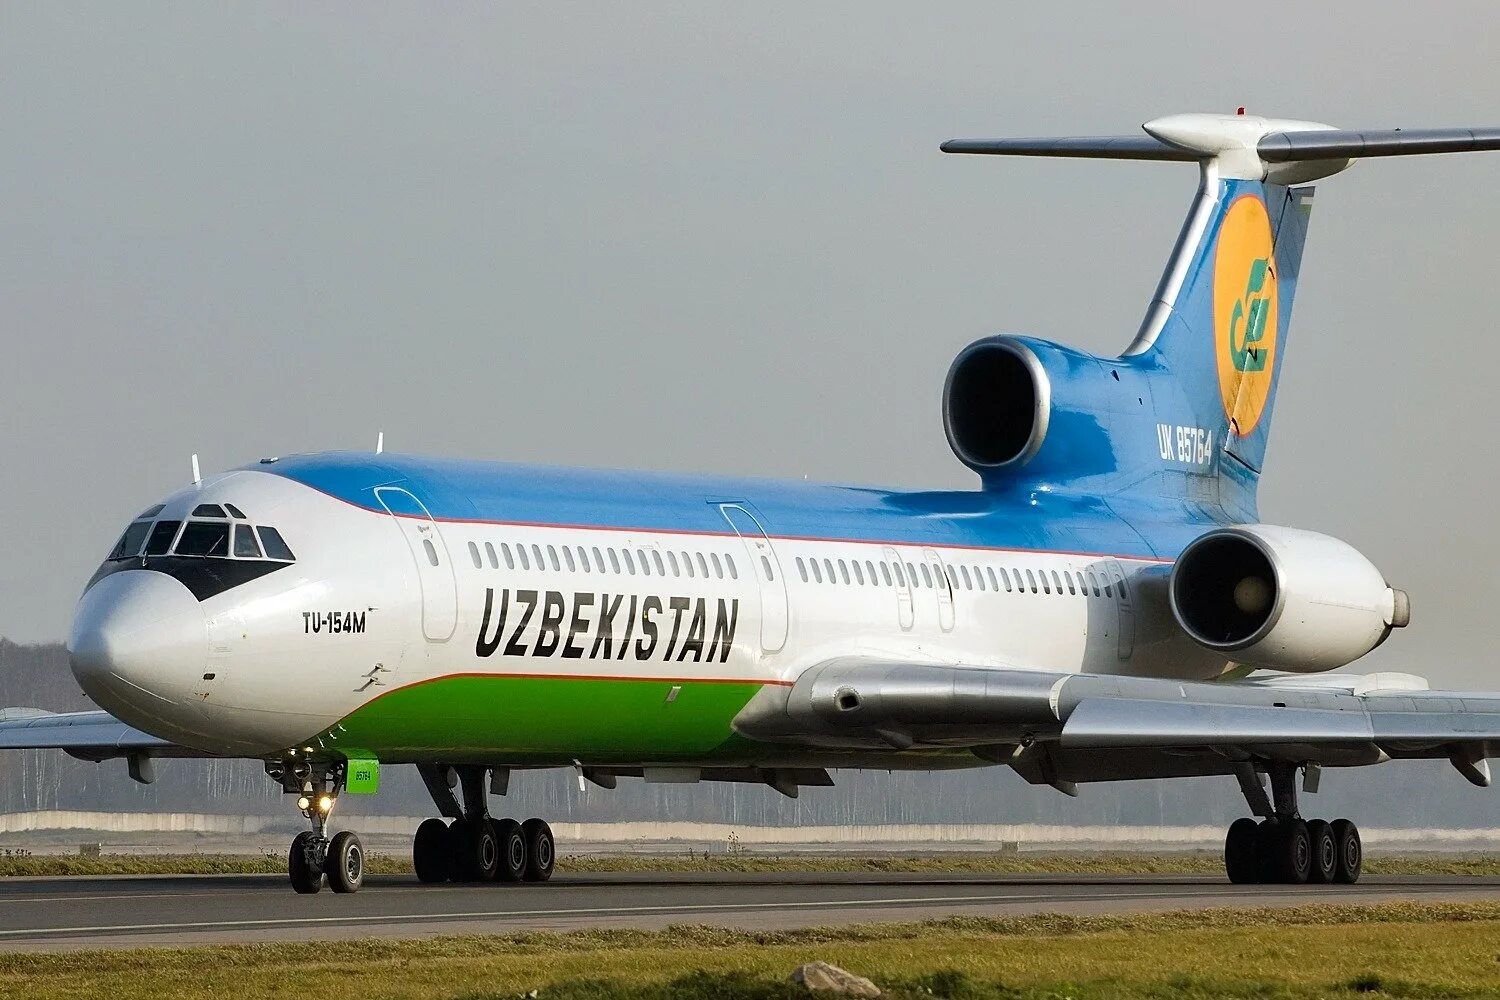 Узбекистан авиакомпания хаво йуллари. Ту 154 Uzbekistan Airways. Uzbekistan Airways Airbus a310. Tupolev tu-154m Uzbekistan Airways. Авиарейсы узбекистана